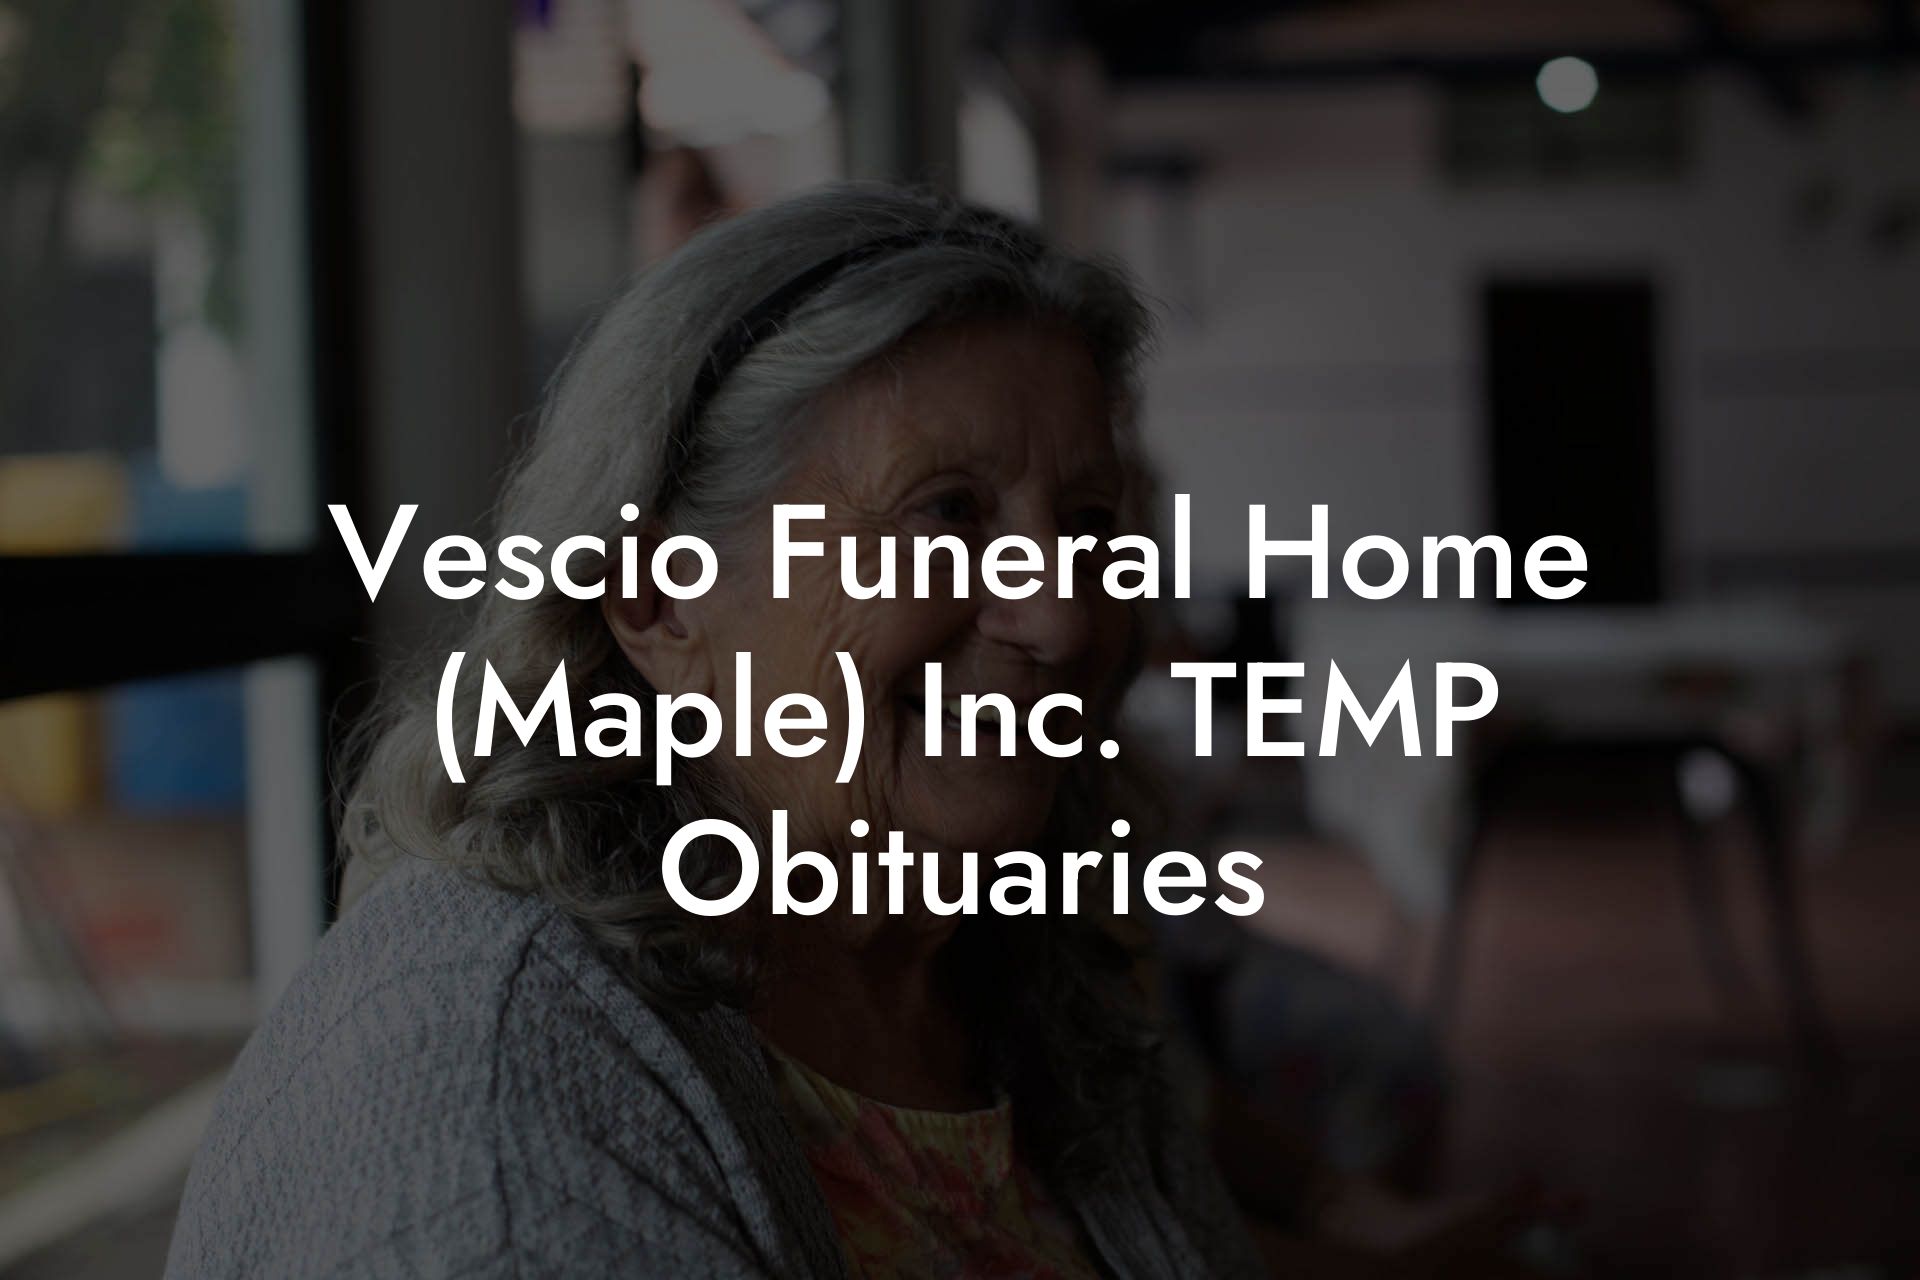 Vescio Funeral Home (Maple) Inc. TEMP Obituaries